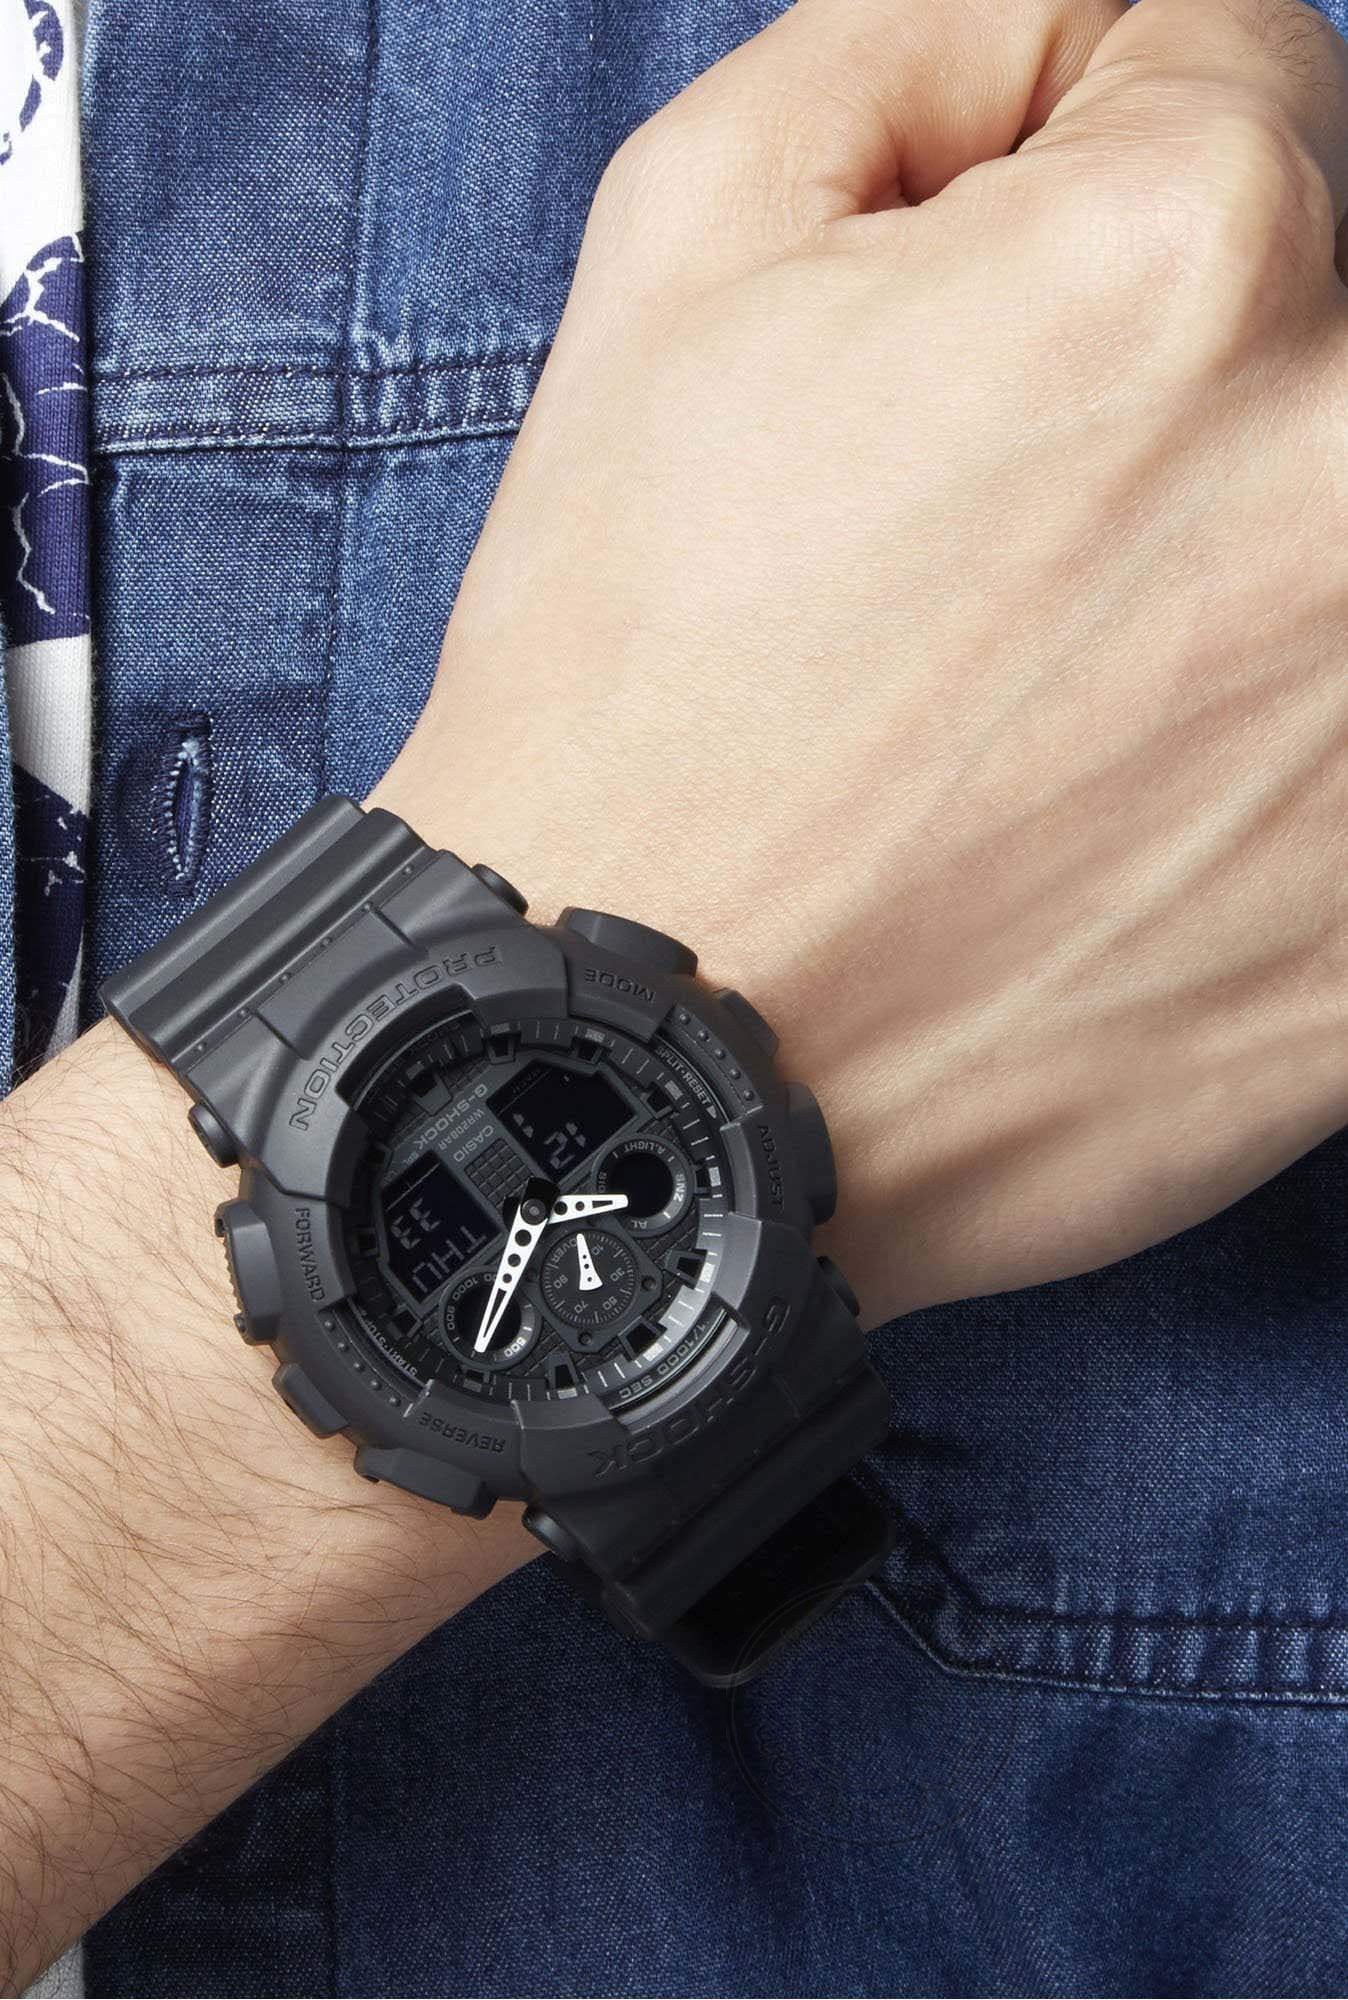 Casio G-Shock Analog-Digital Black Dial Men's Watch for Man Sports Gshock - GA-100-1A1DR (G270) Gift